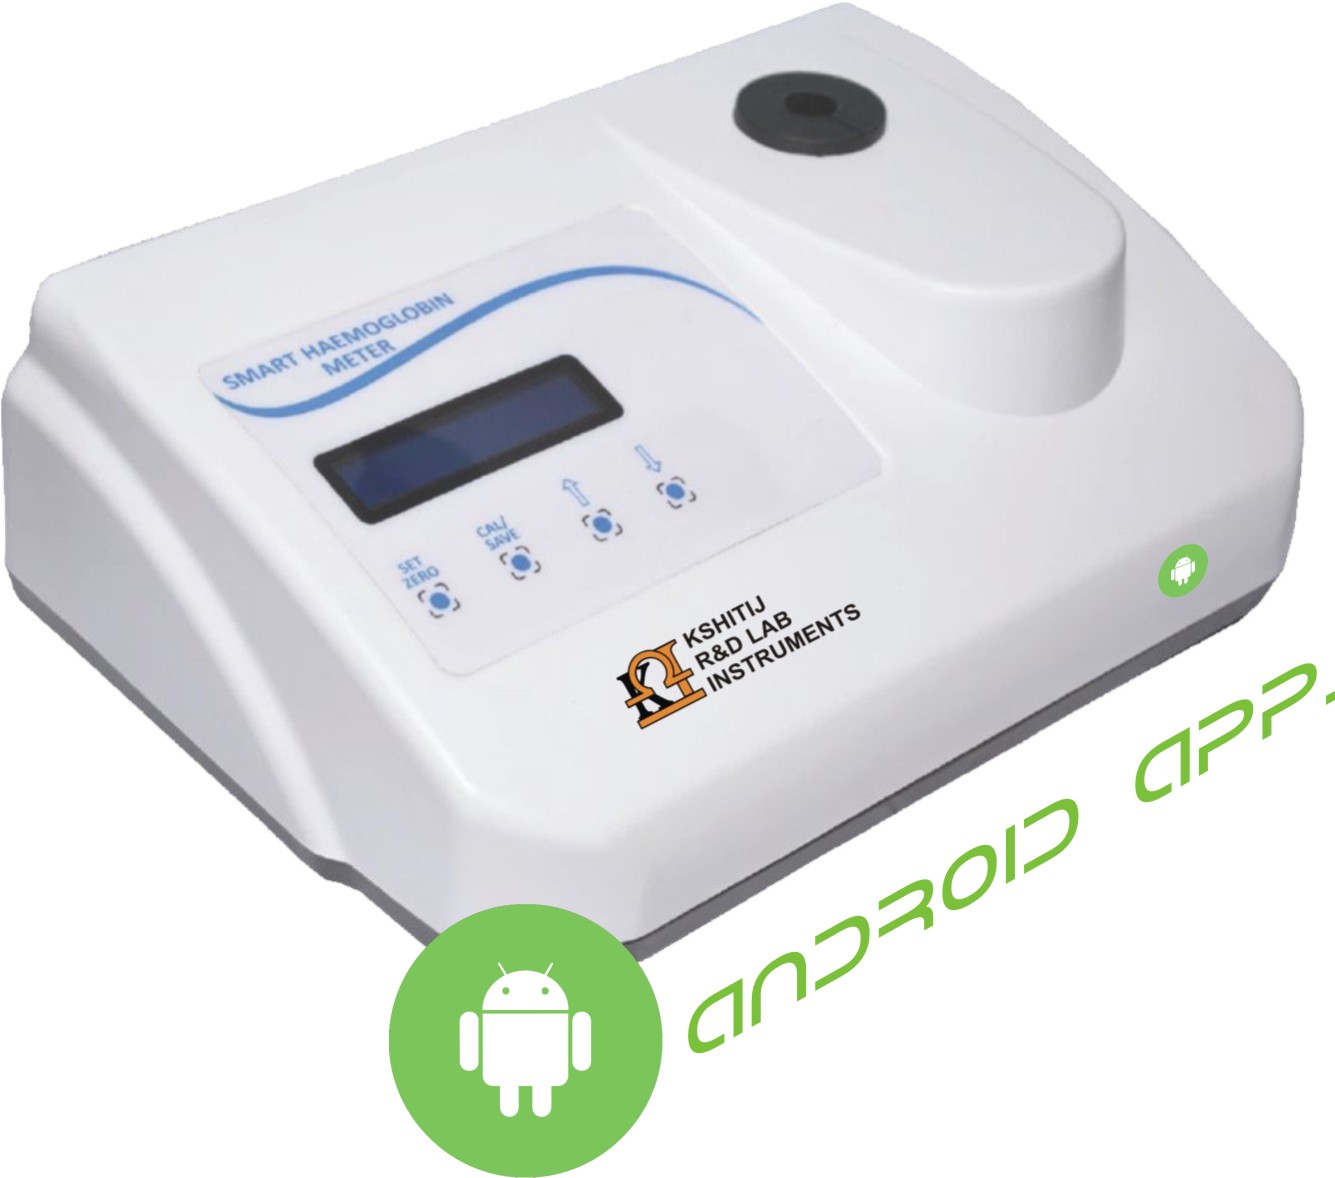  Smart Hemoglobin Meter ( Android Based), Model No.: KI - 163